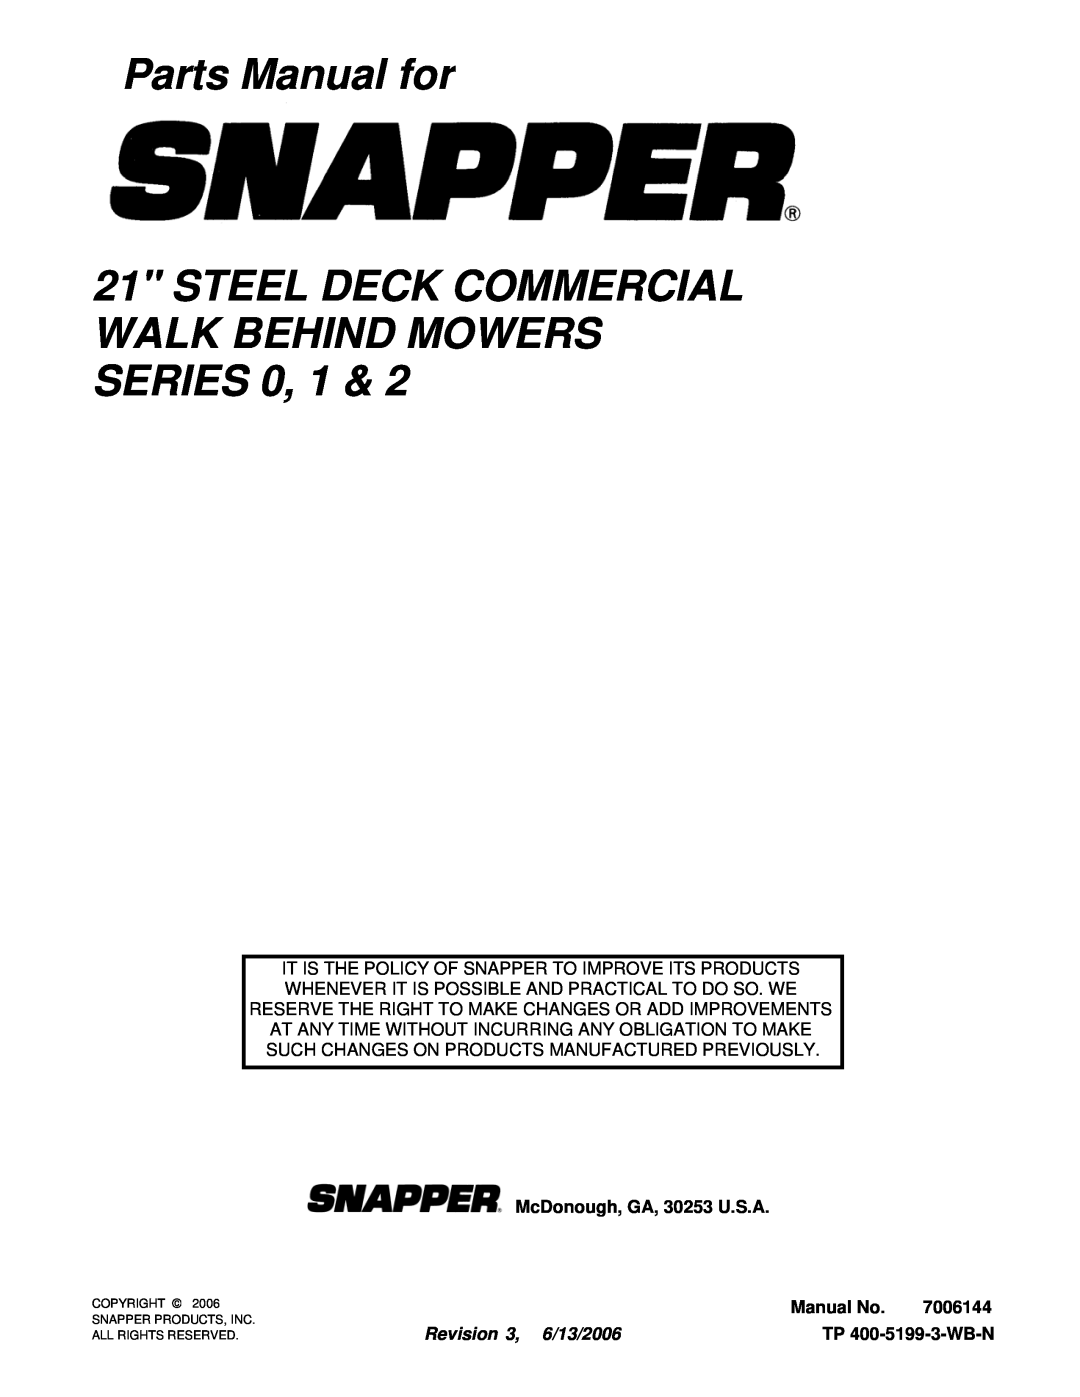 Snapper C21500KWV, CP21500KWV Parts Manual for, STEEL DECK COMMERCIAL WALK BEHIND MOWERS SERIES 0, 1, Manual No, 7006144 